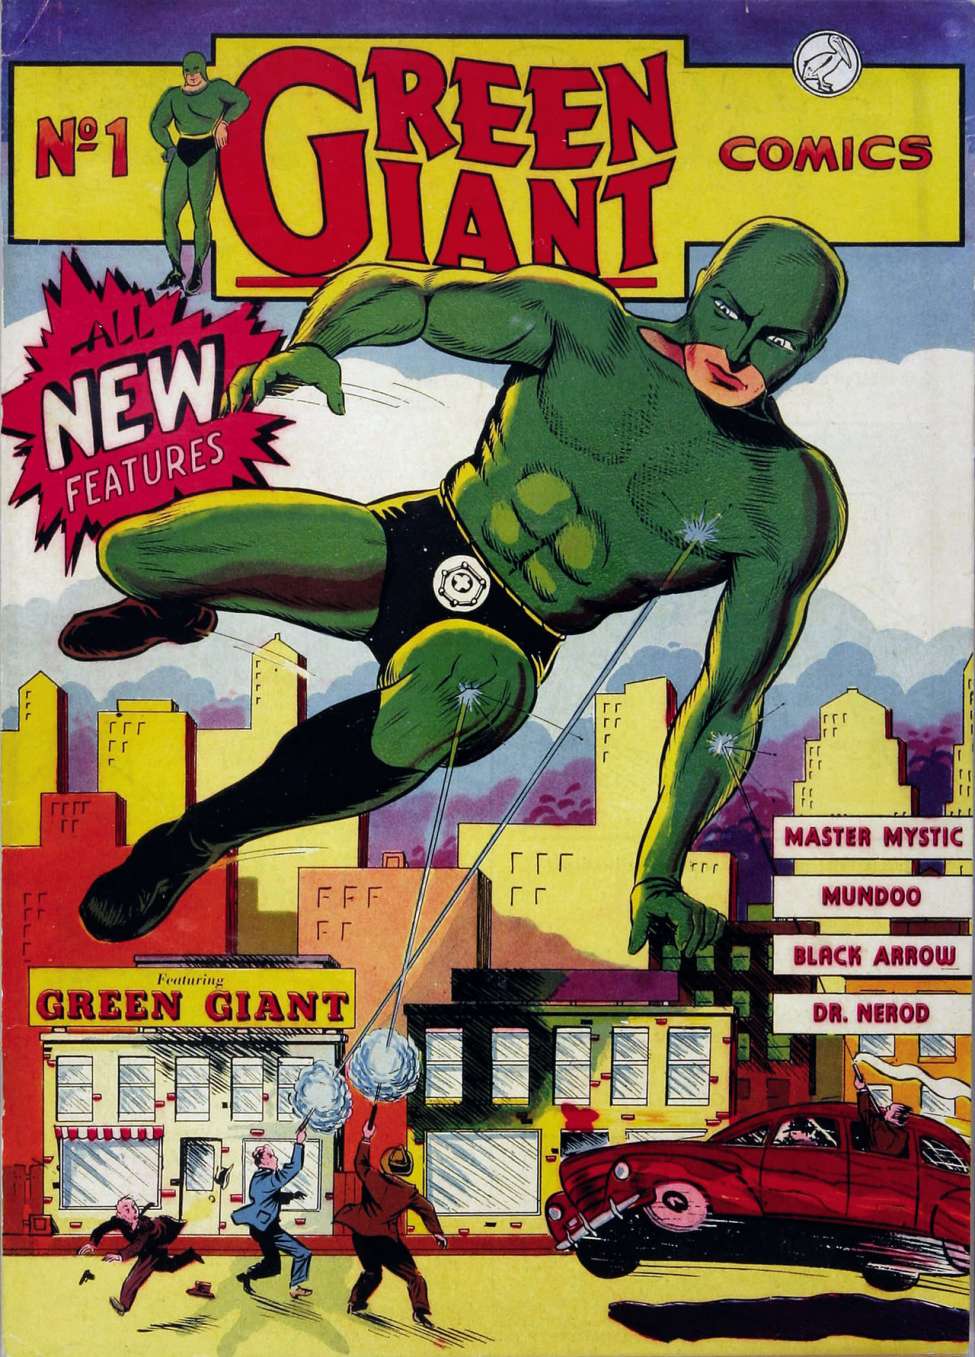 Comic Book Cover For Pelican Publications - Green Giant Comics 1 (fiche)